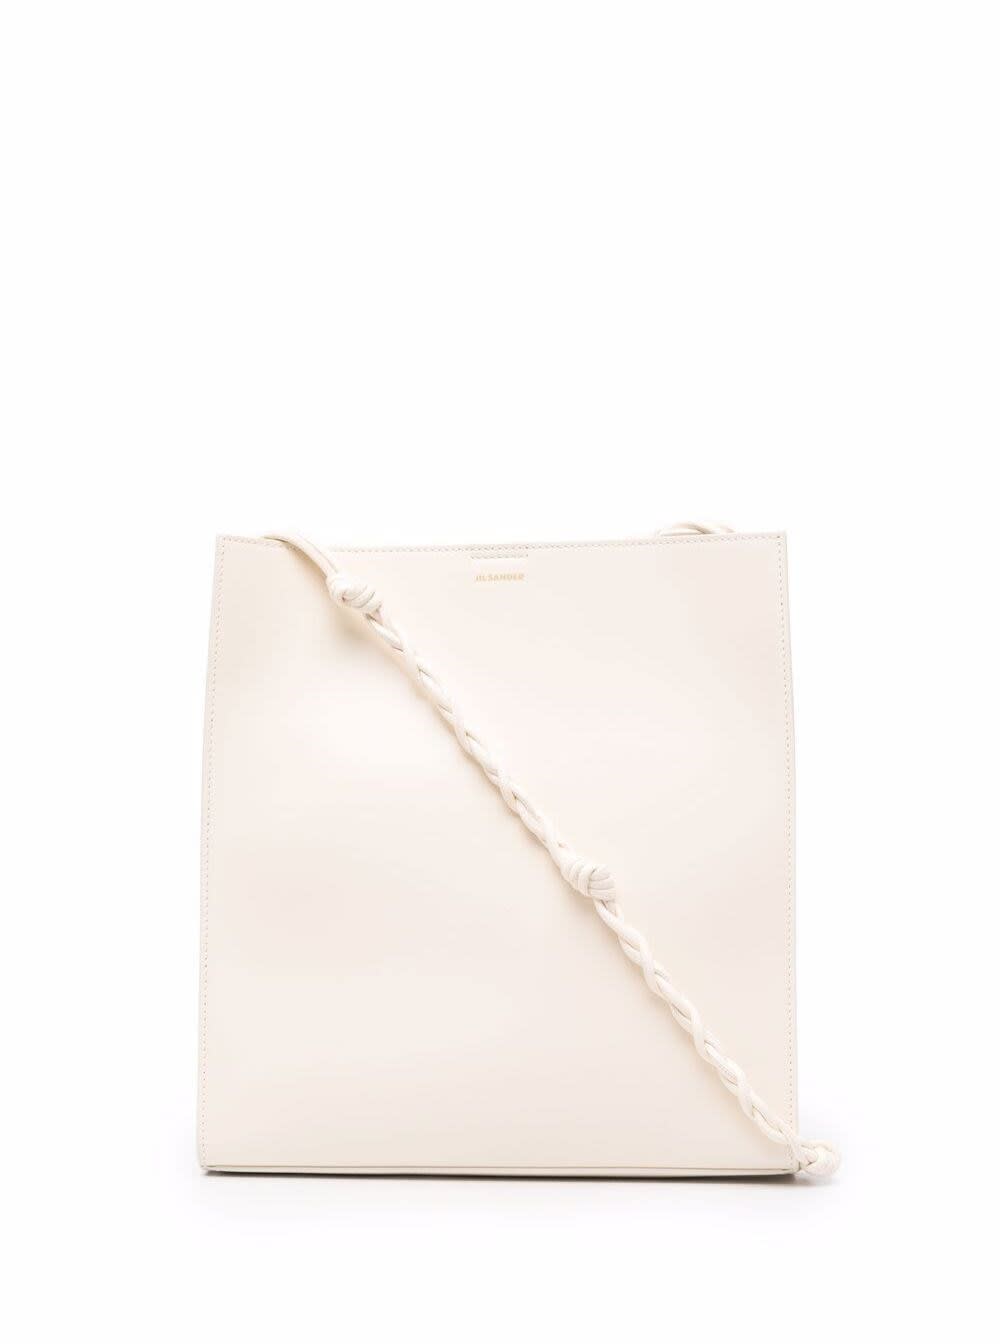 Jil Sander Tangle White Leather Crossbody Bag